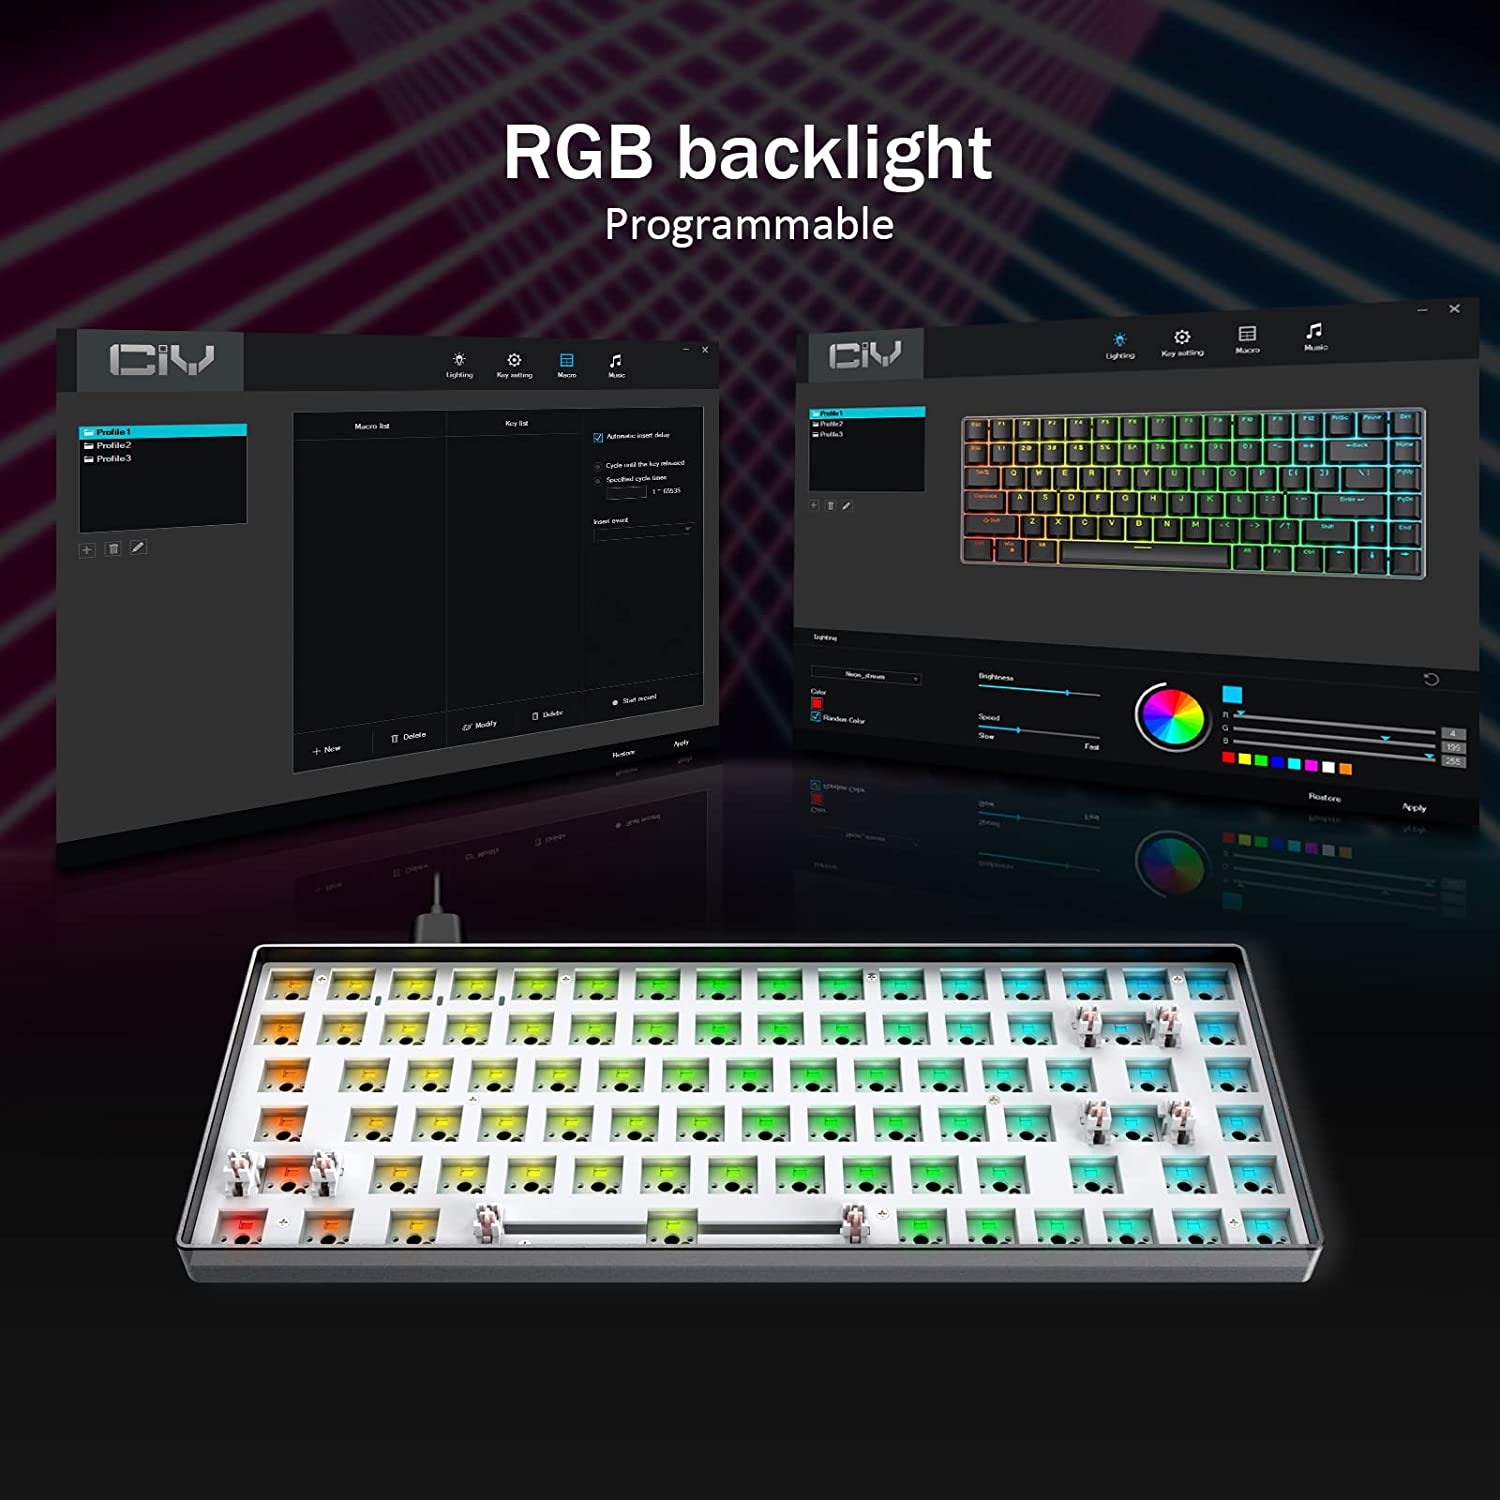 ZUOYA Tester84 Hot Swap RGB Backlight Gaming Mechanical Keyboard Kit WiredSupport DIY Cute Girl Keyboard Kit